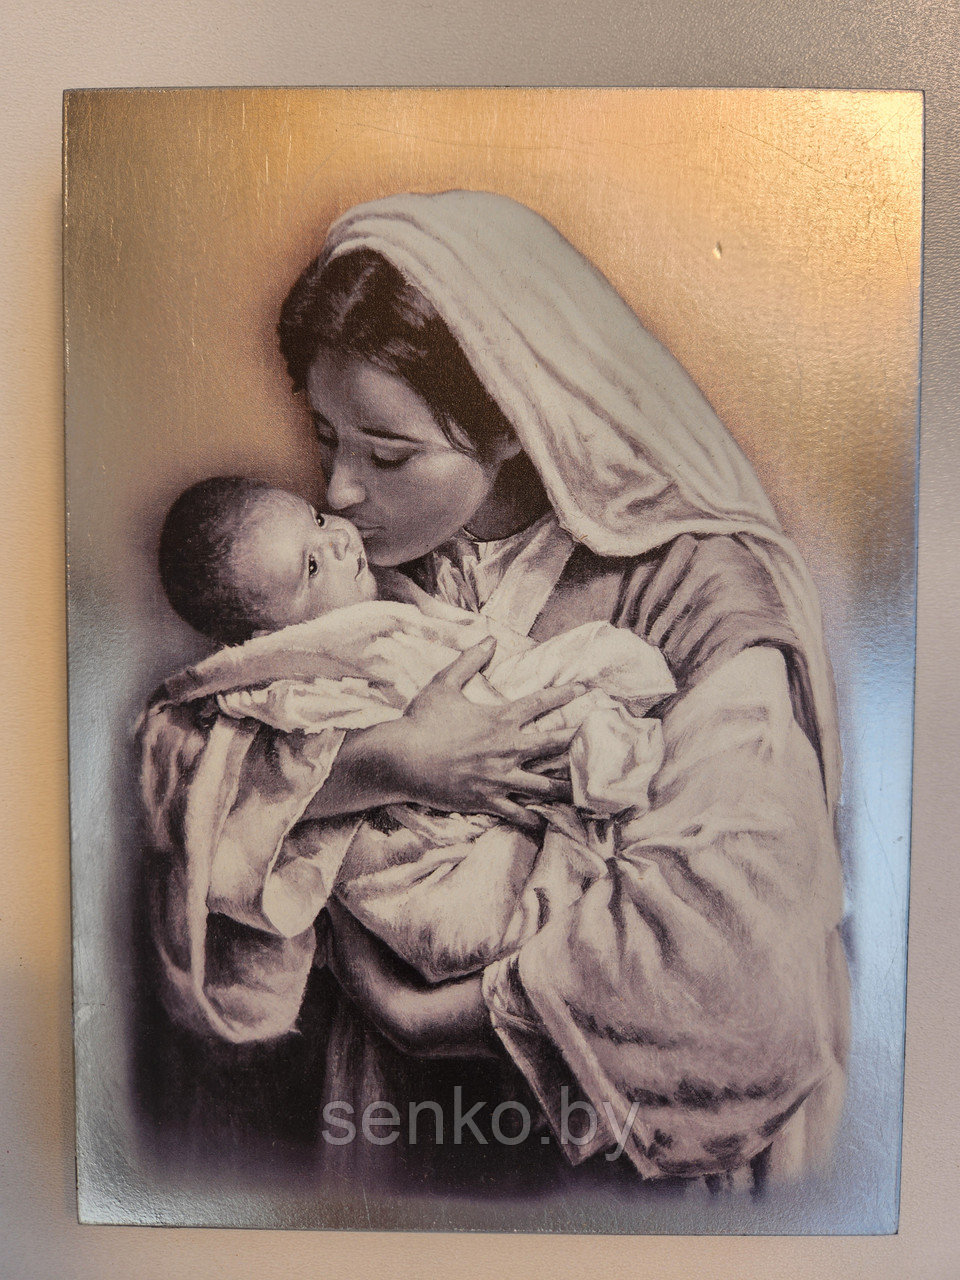 Икона на дереве Мария с млоденцем